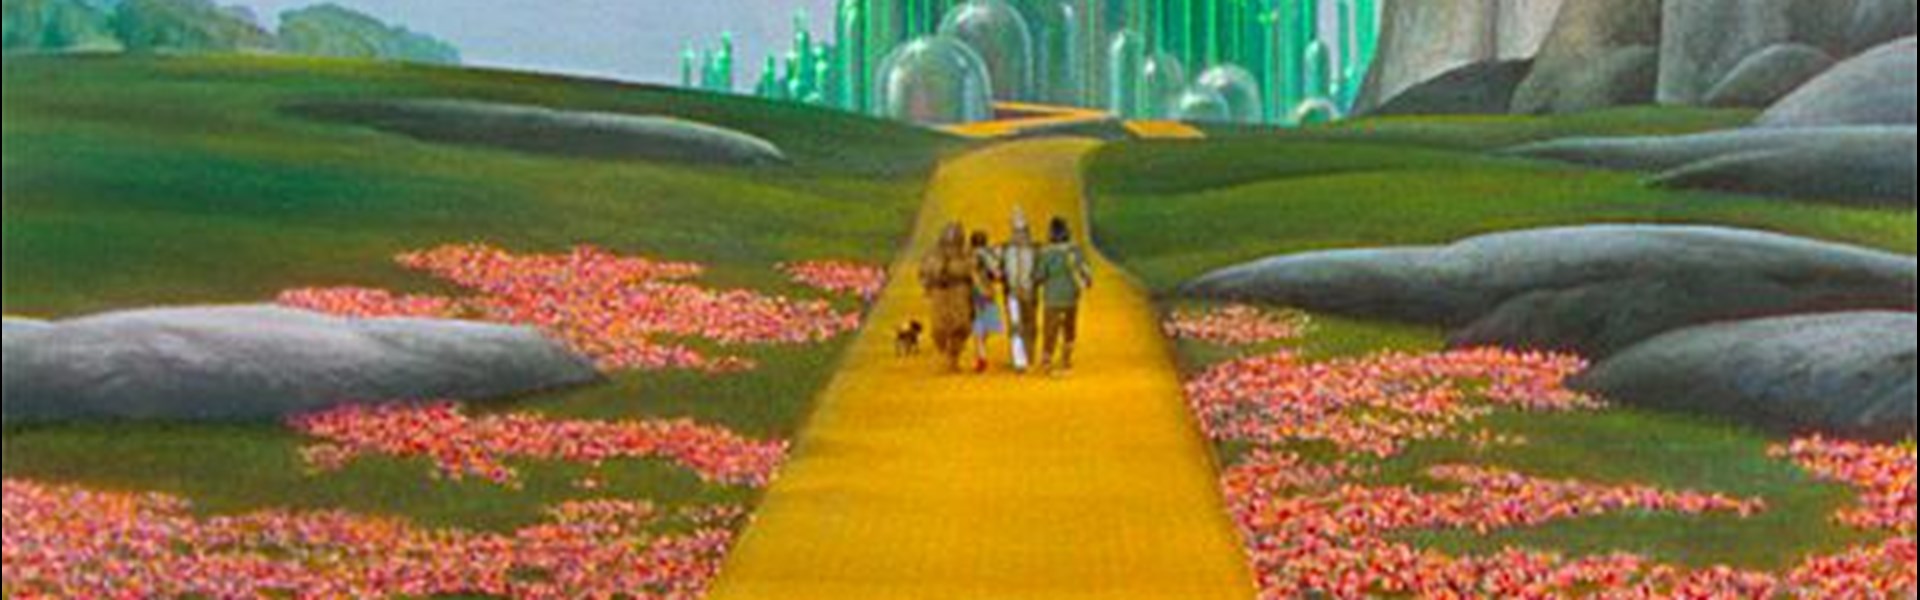 FILM: The Wizard Of Oz (Dementia Friendly)